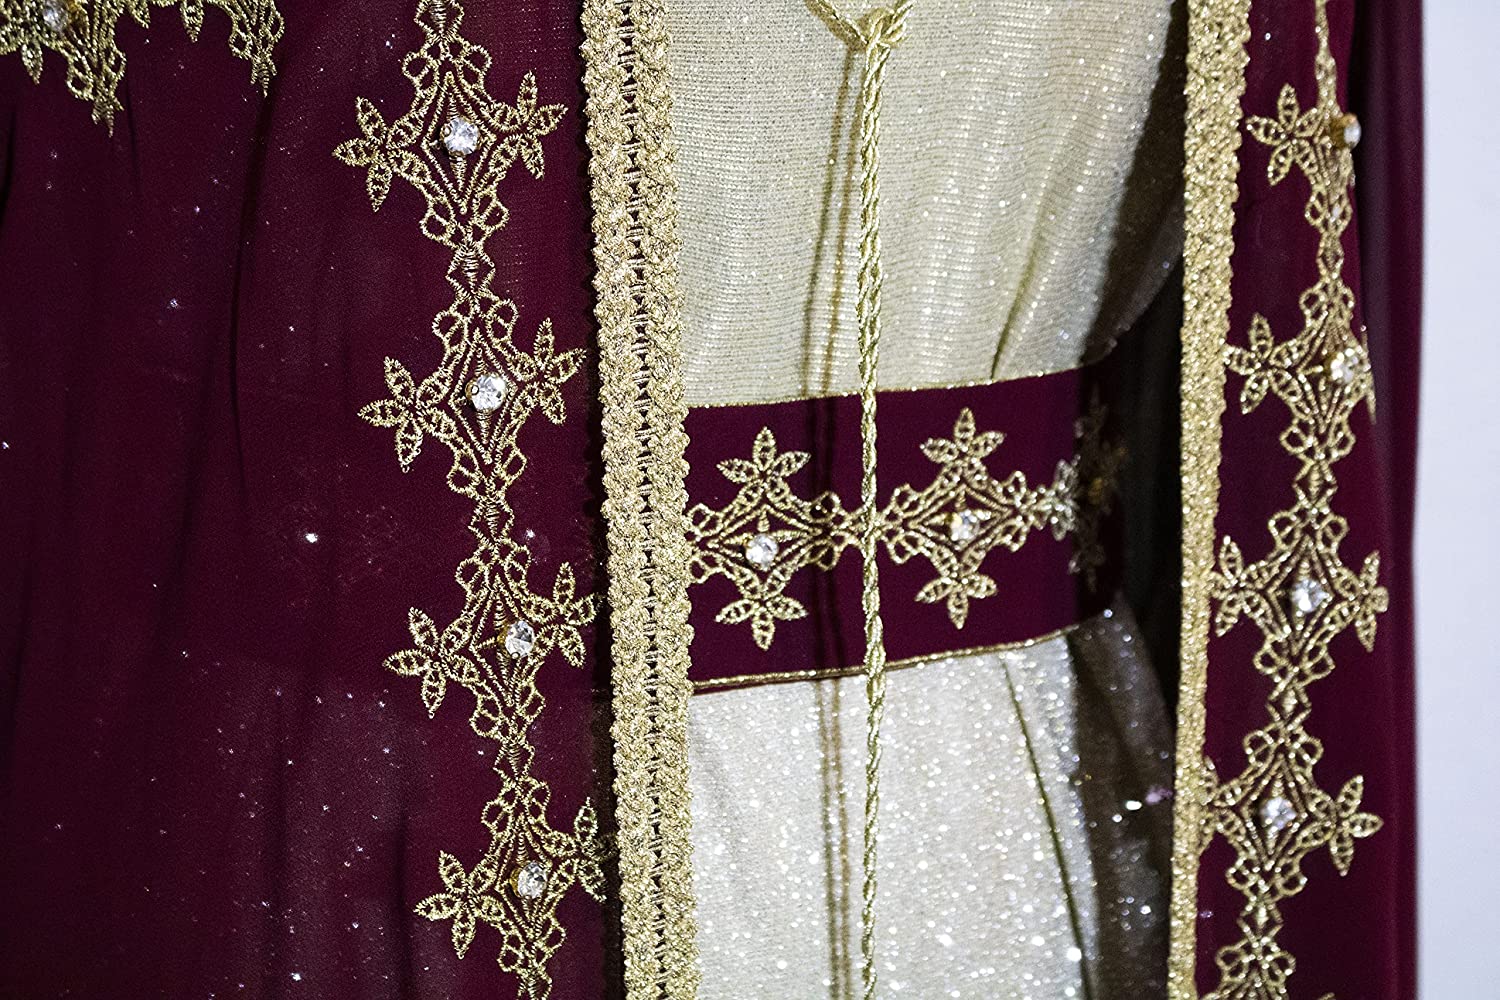 Marwa Fashion Women’s Muslim Burgundy and Gold Color Kaftan/Caftan - Arabic Islamic Moroccan Medium Size Dress with Embroidery